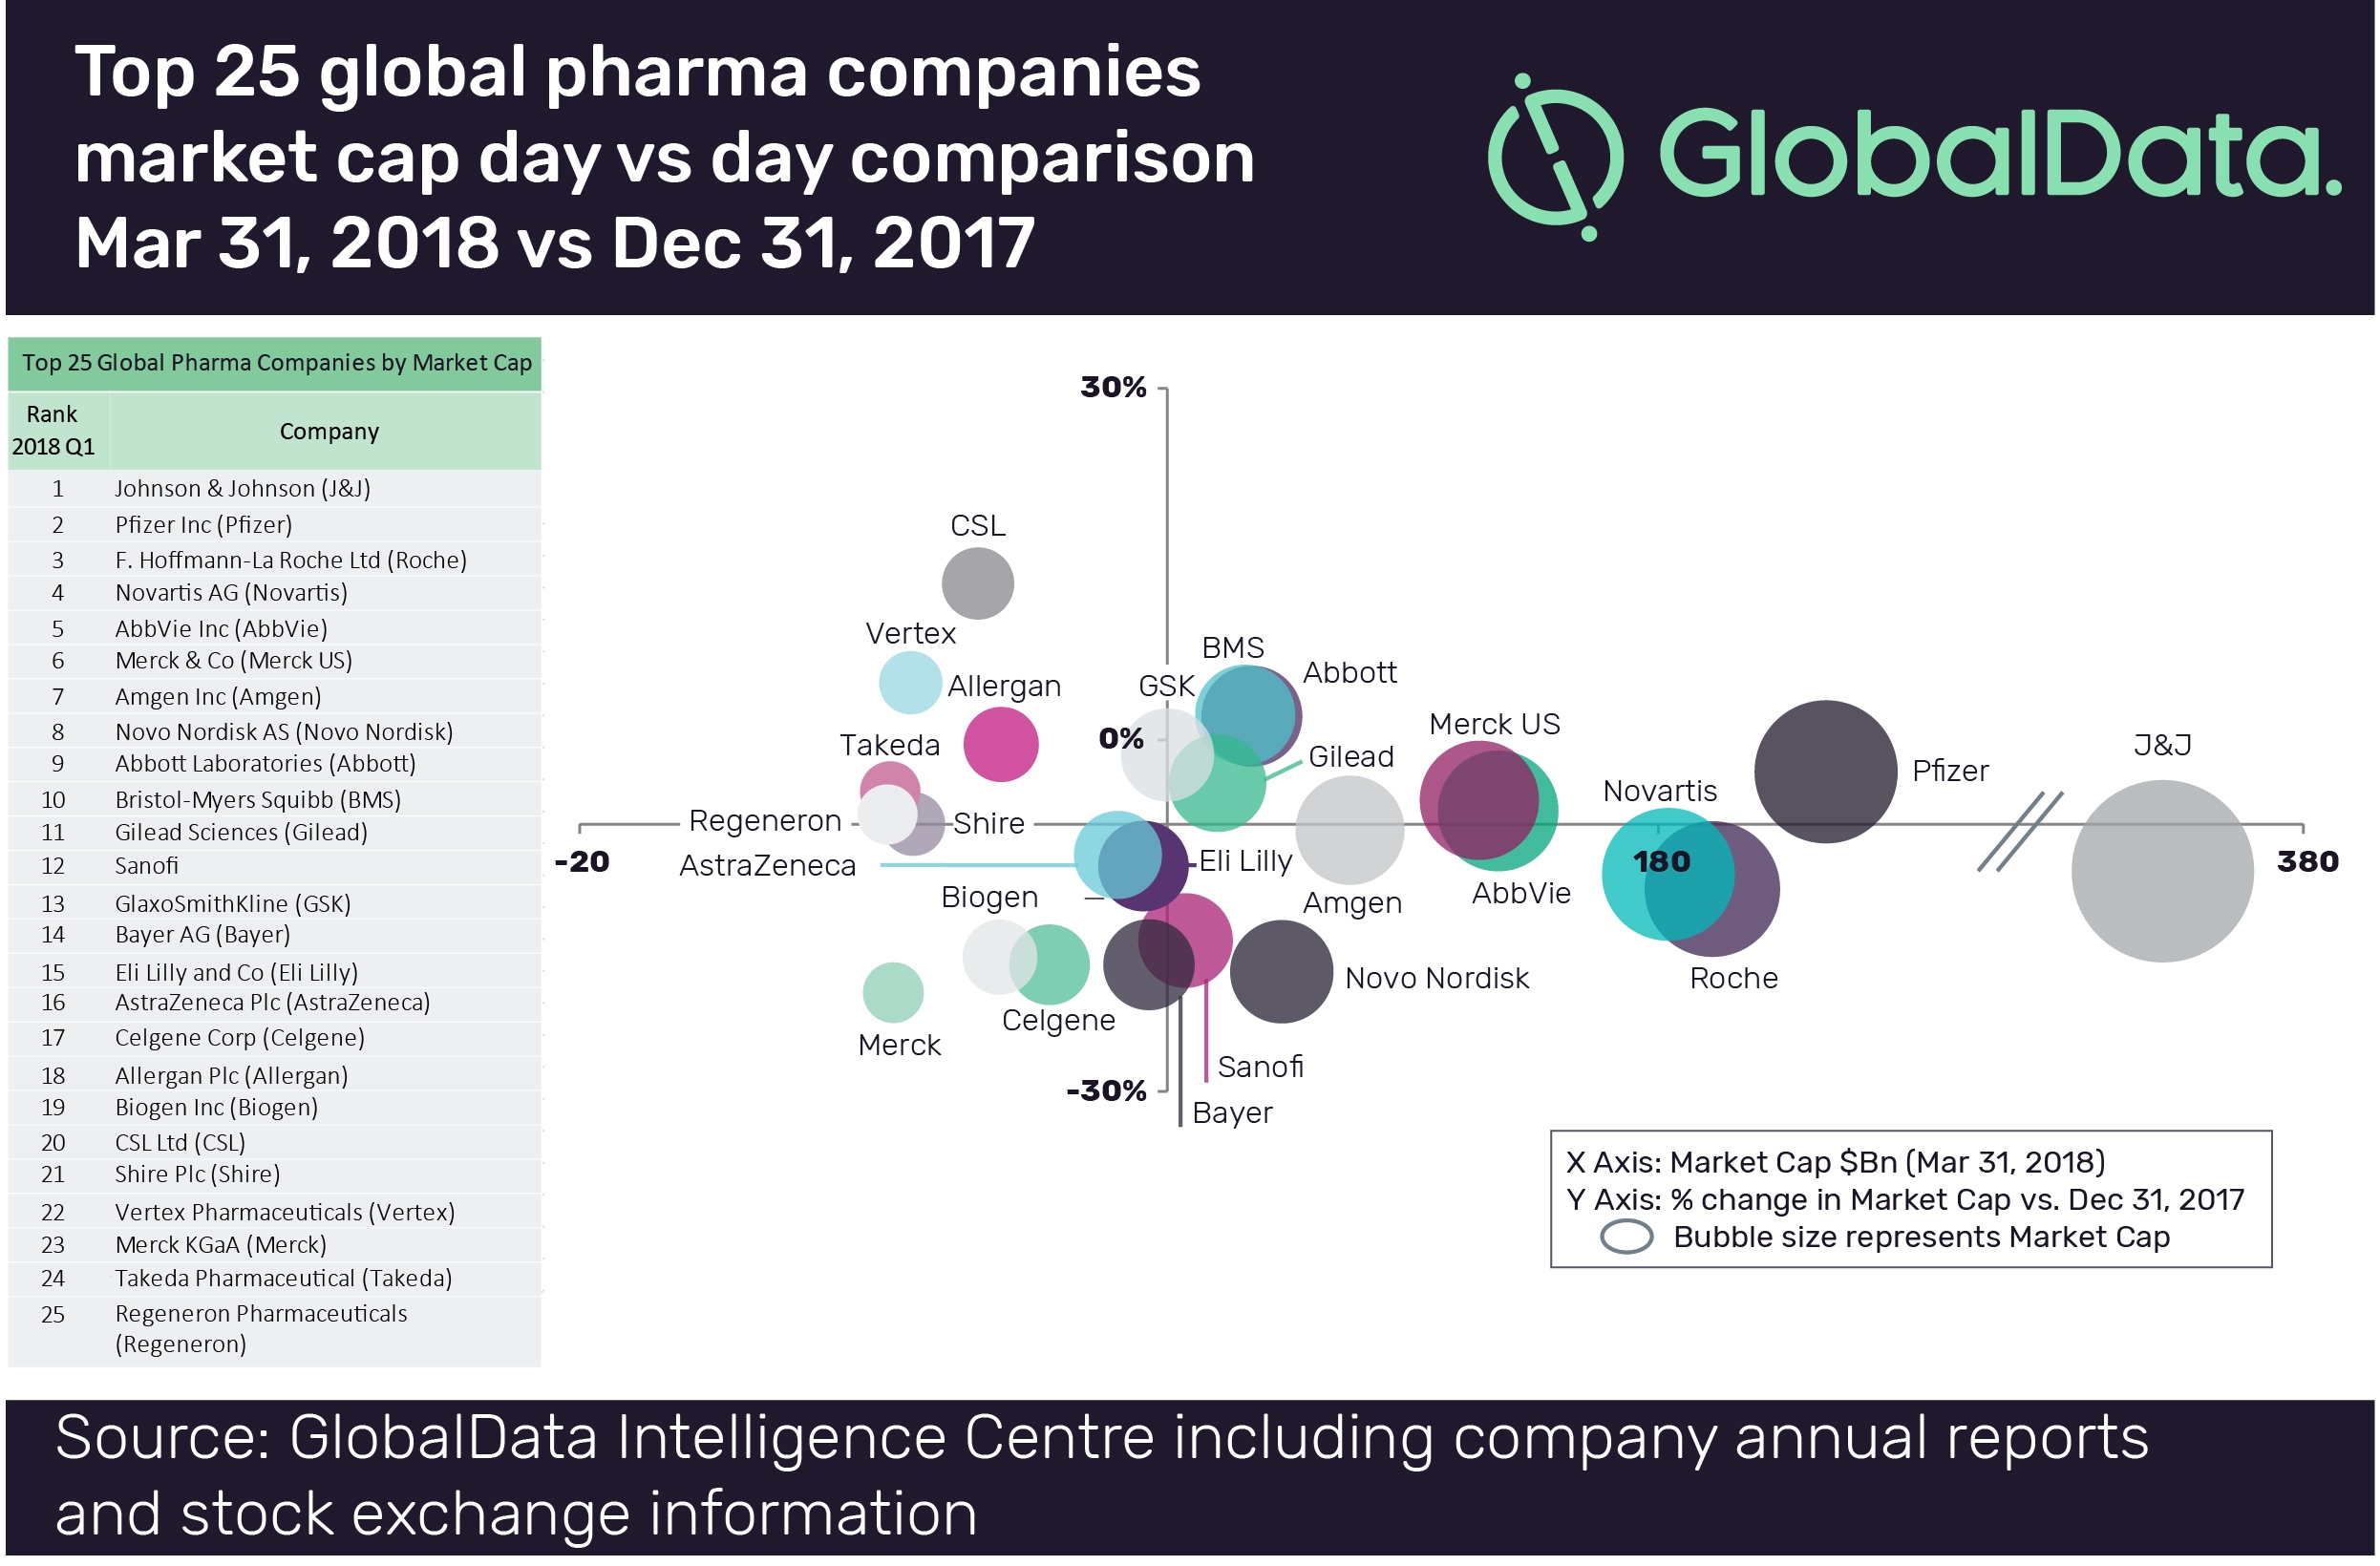 GlobalData publishes analysis of top 25 global pharma companies 
